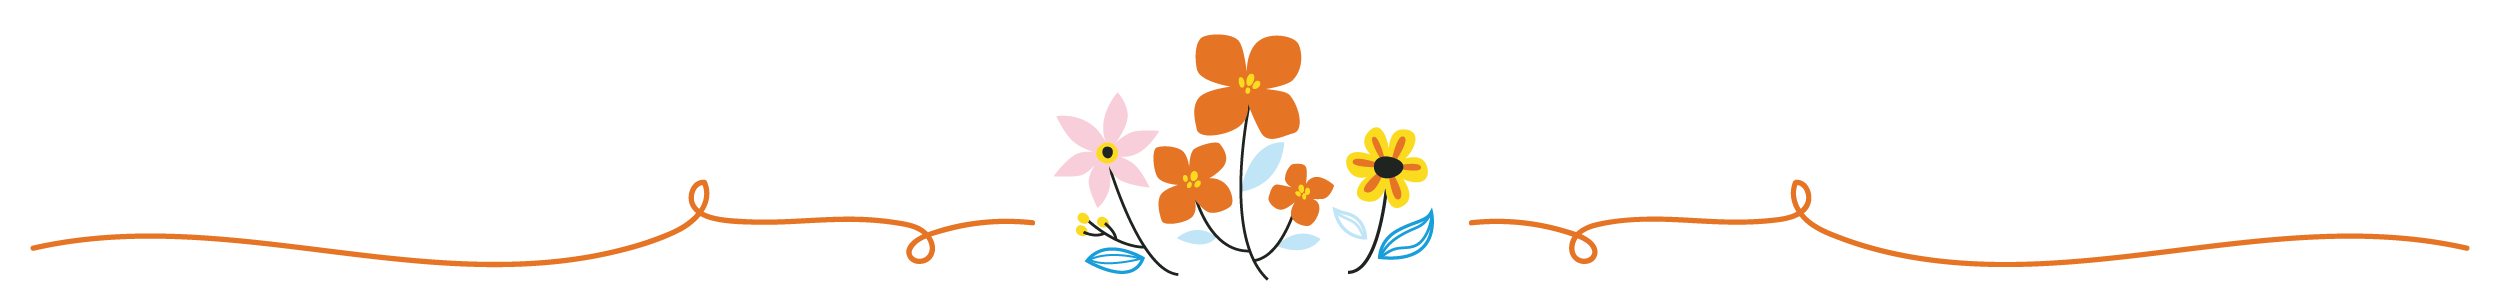 Decorative illustration of four flowers